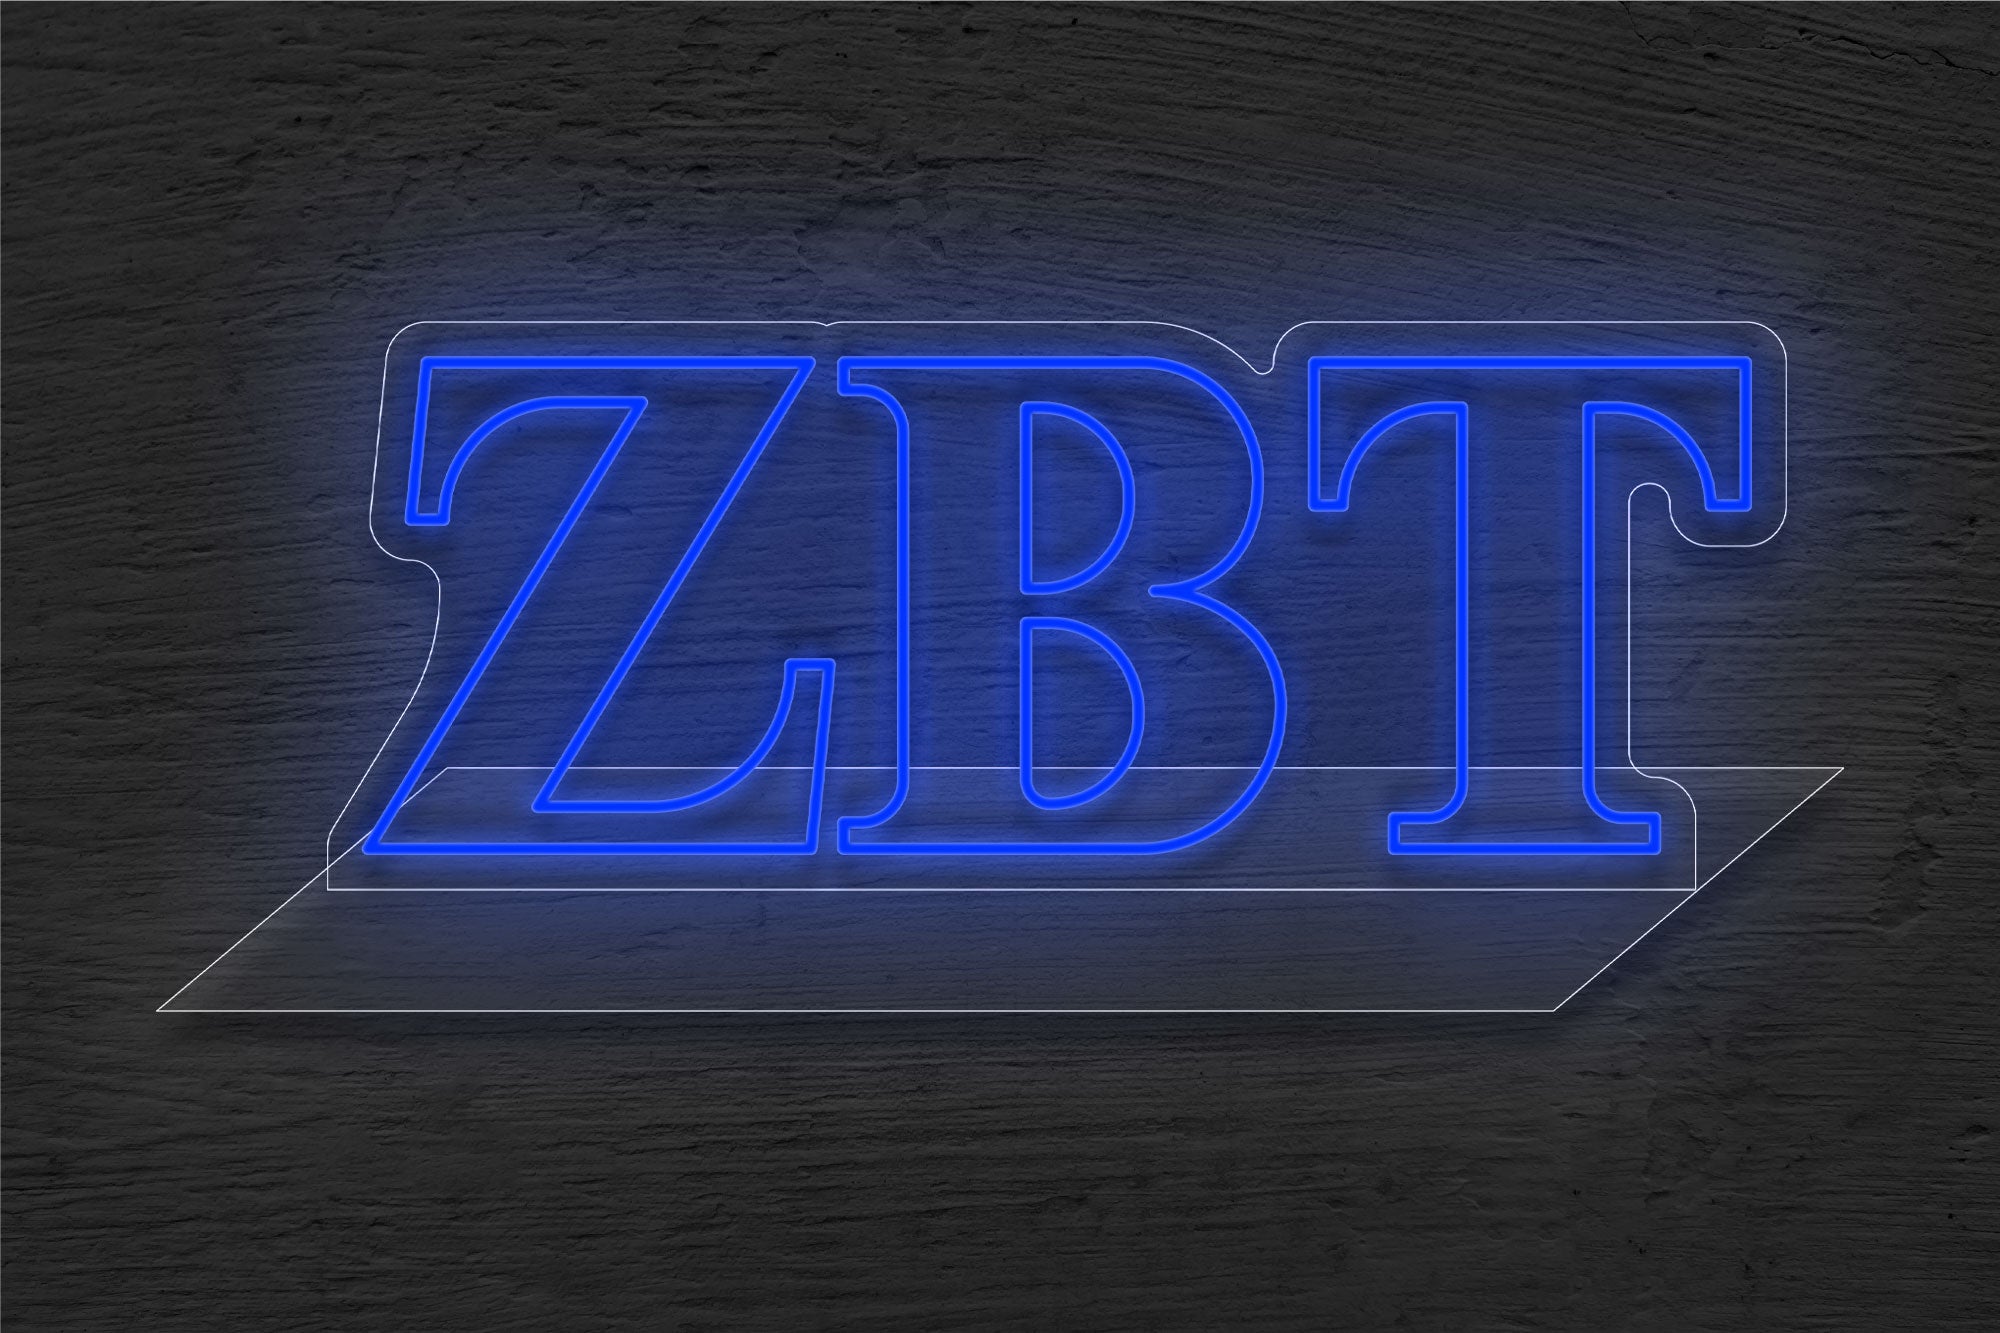 Zeta Beta Tau LED Neon Sign